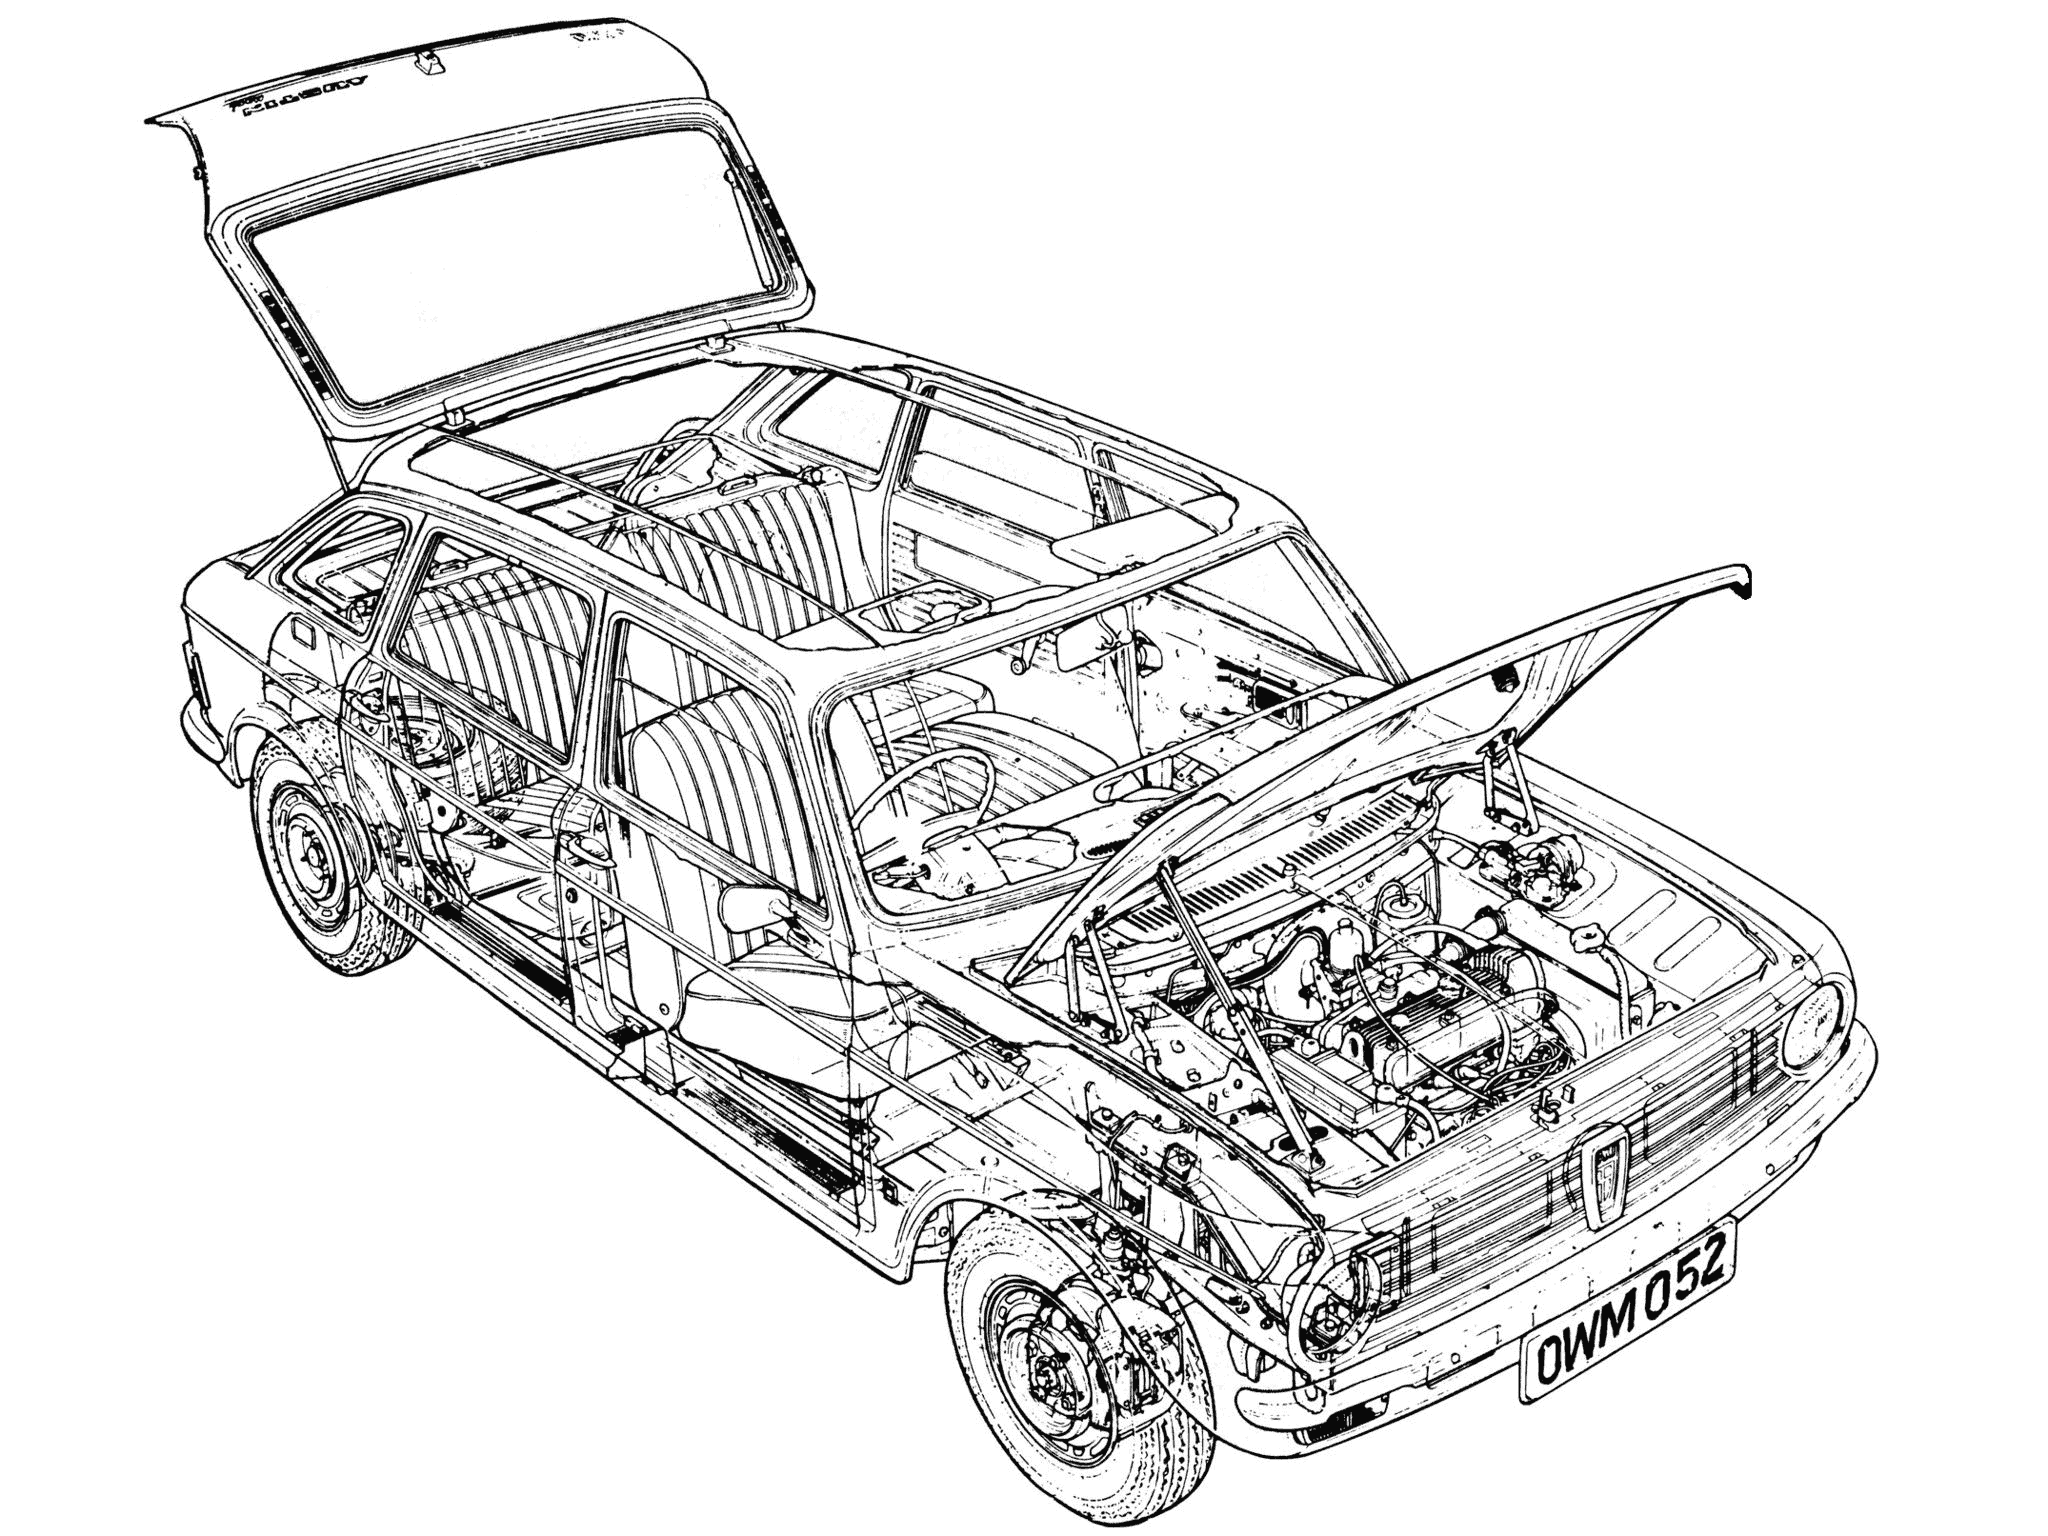 Austin Maxi cutaway drawing